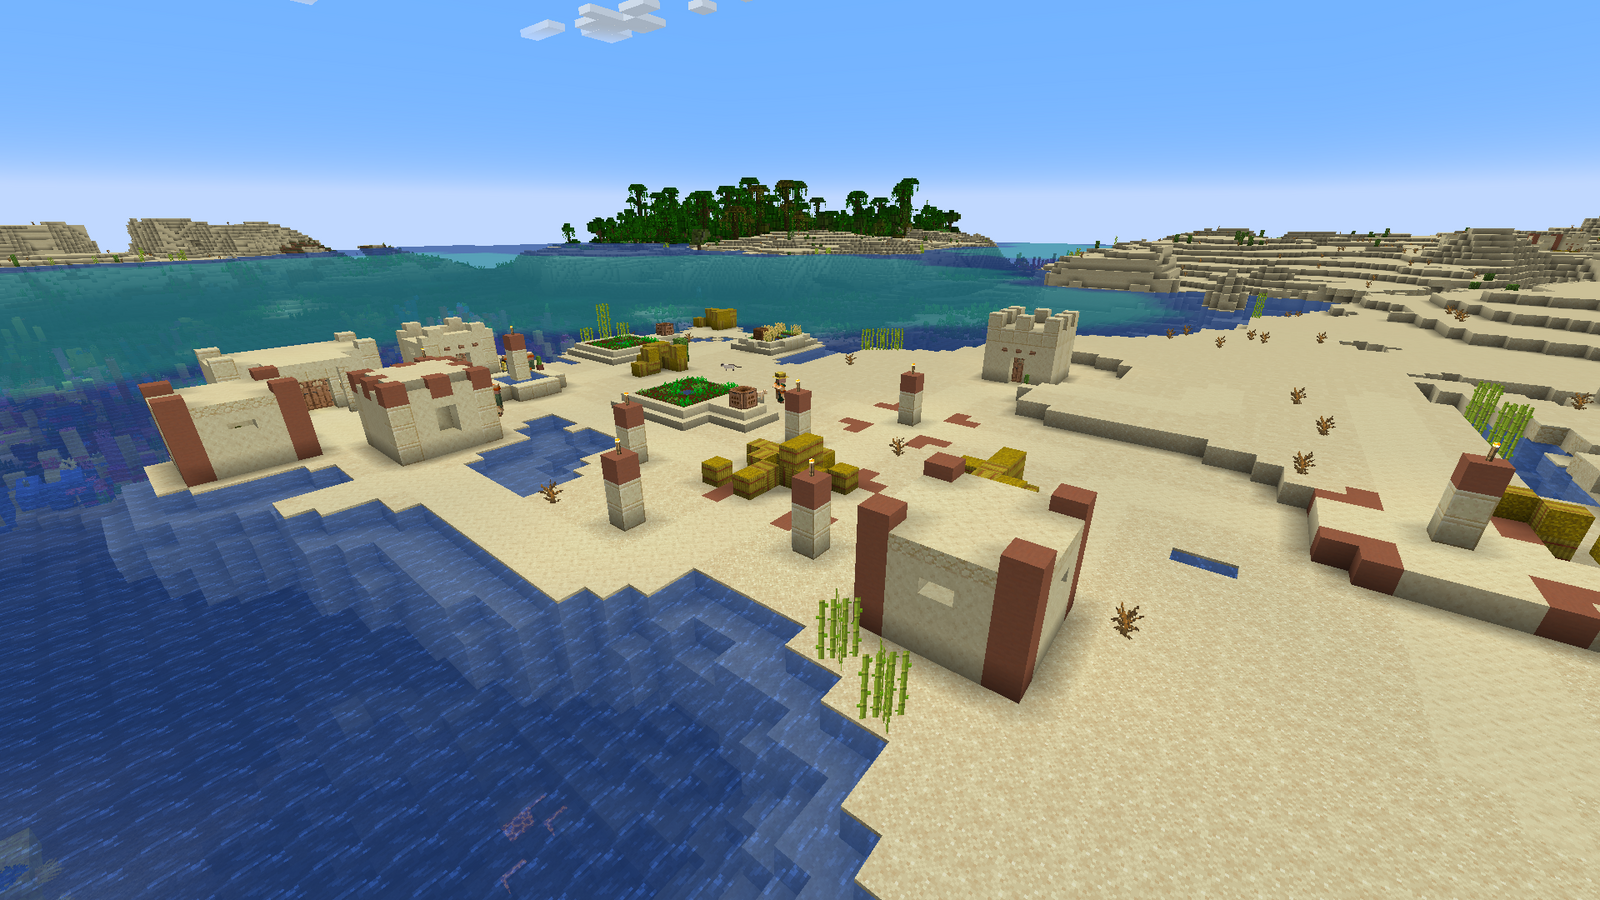 A Minecraft village in the desert, beside the ocean.